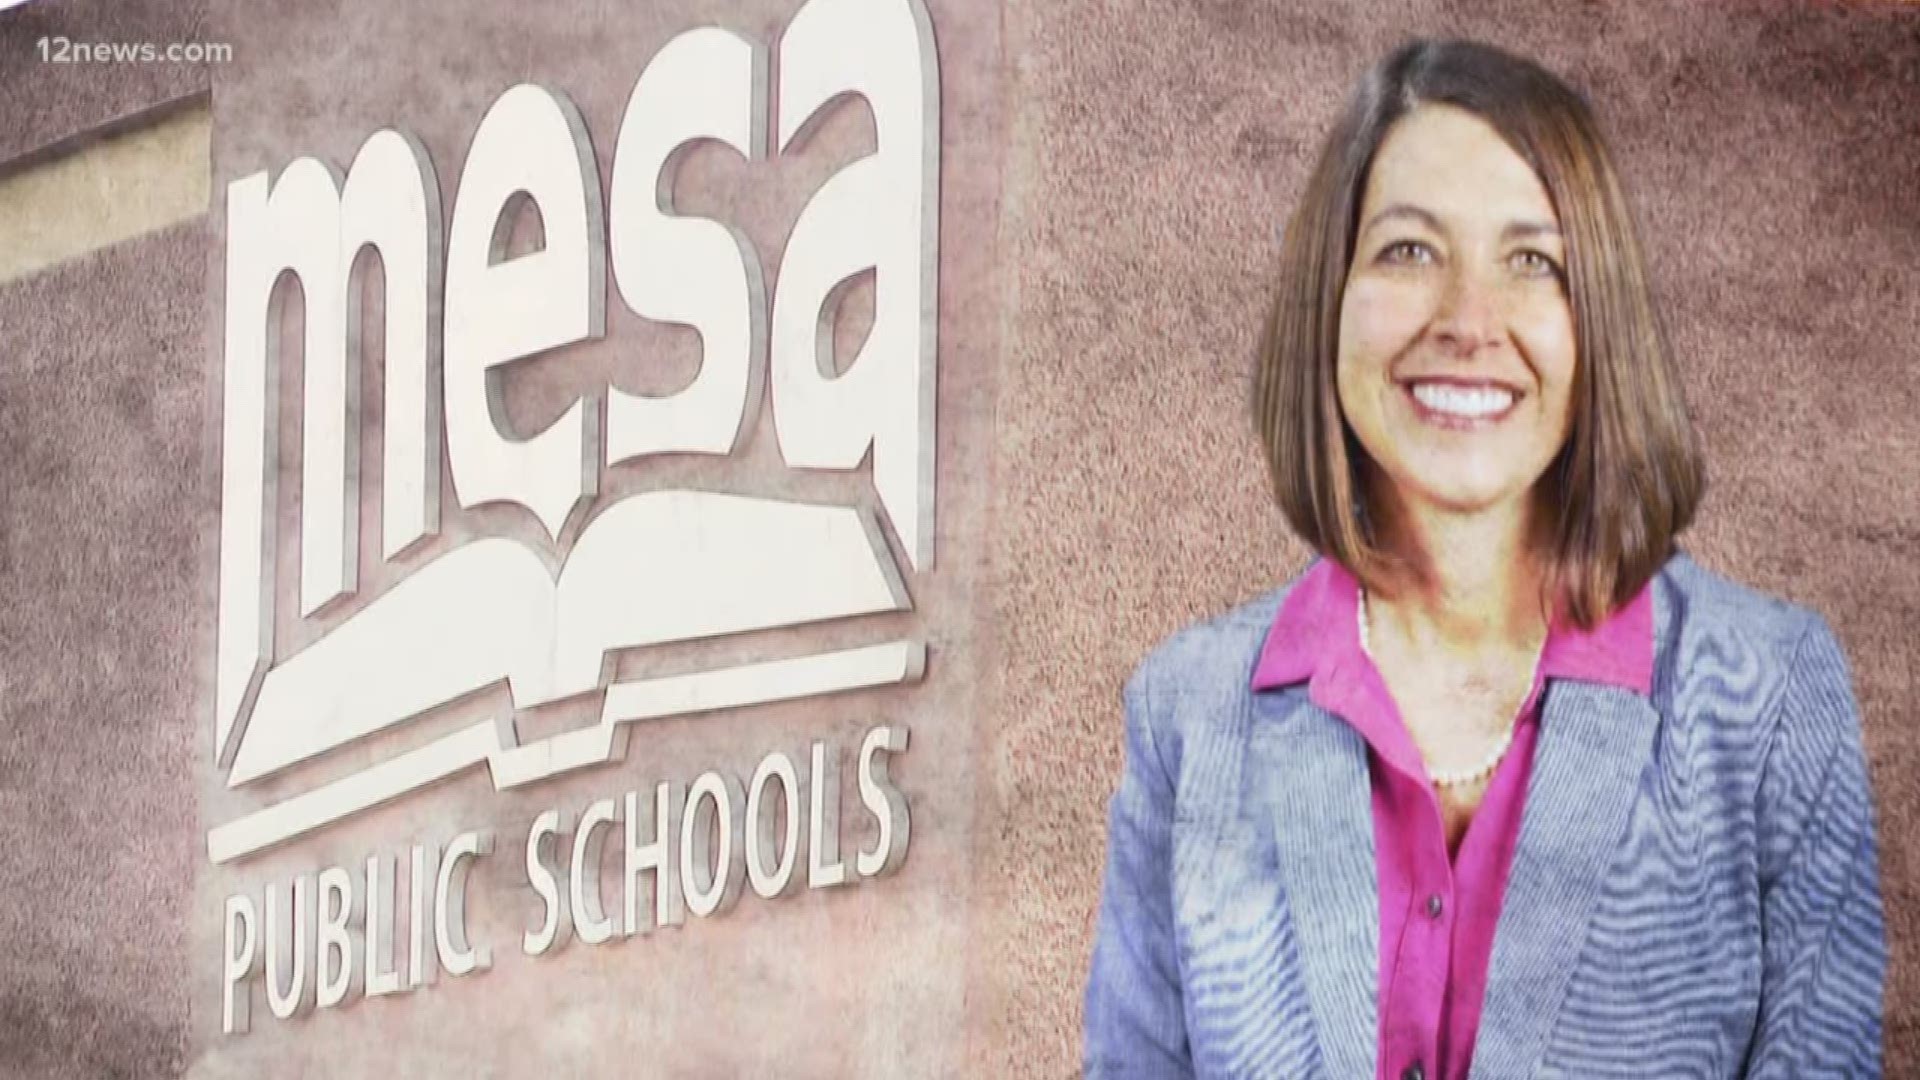 mesa-public-schools-calendar-2022-2023-holidays-in-pdf